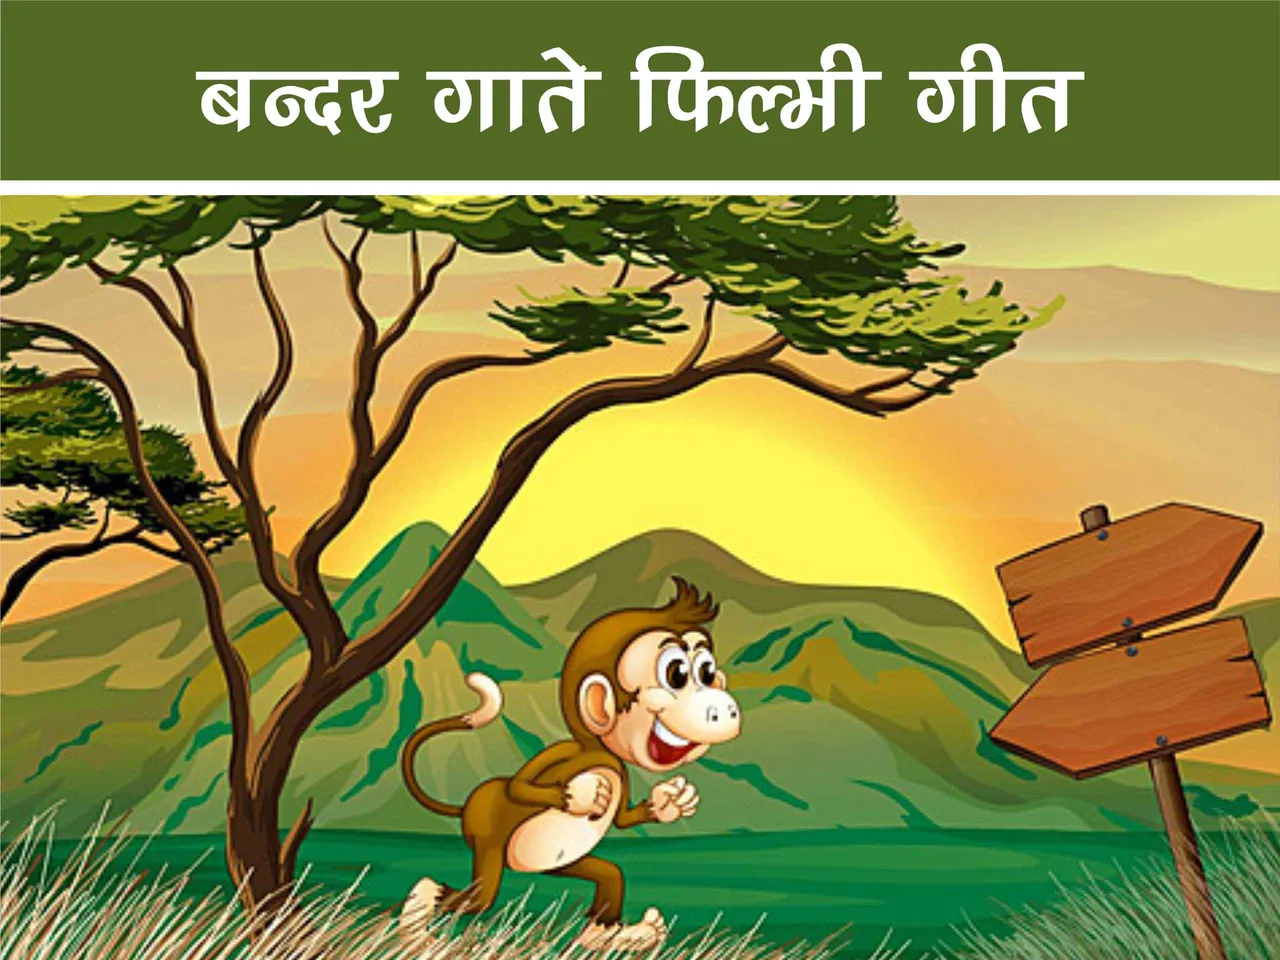 Monkey roaming in jungle cartoon image